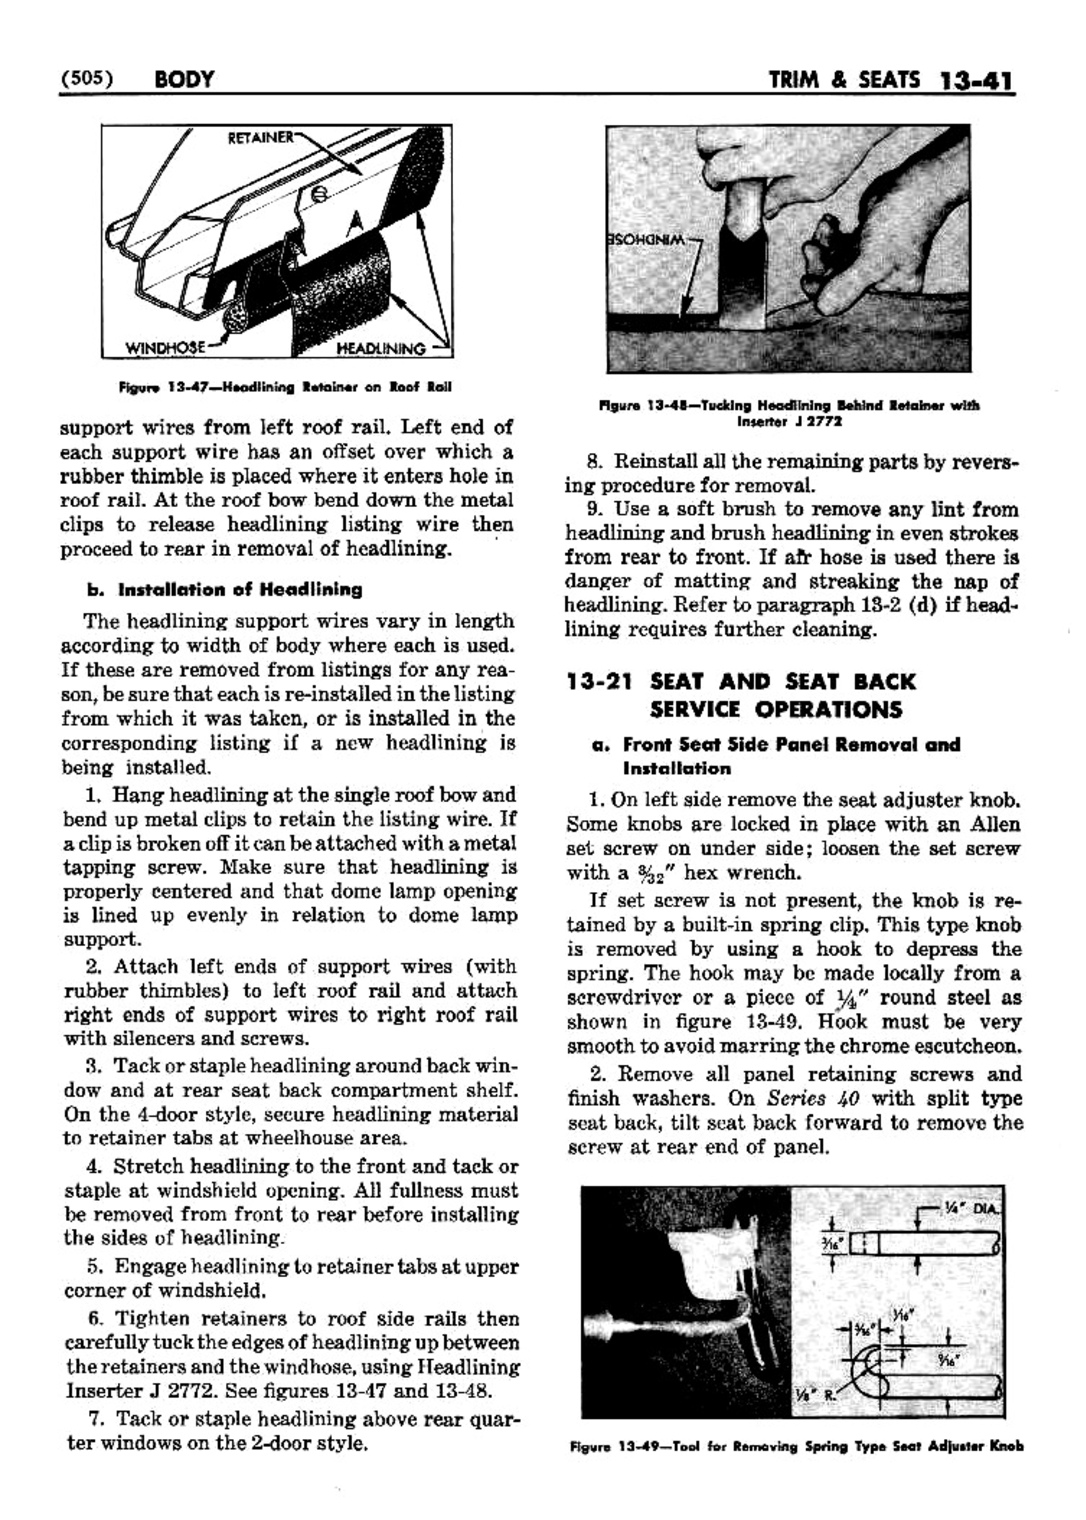 n_14 1952 Buick Shop Manual - Body-041-041.jpg